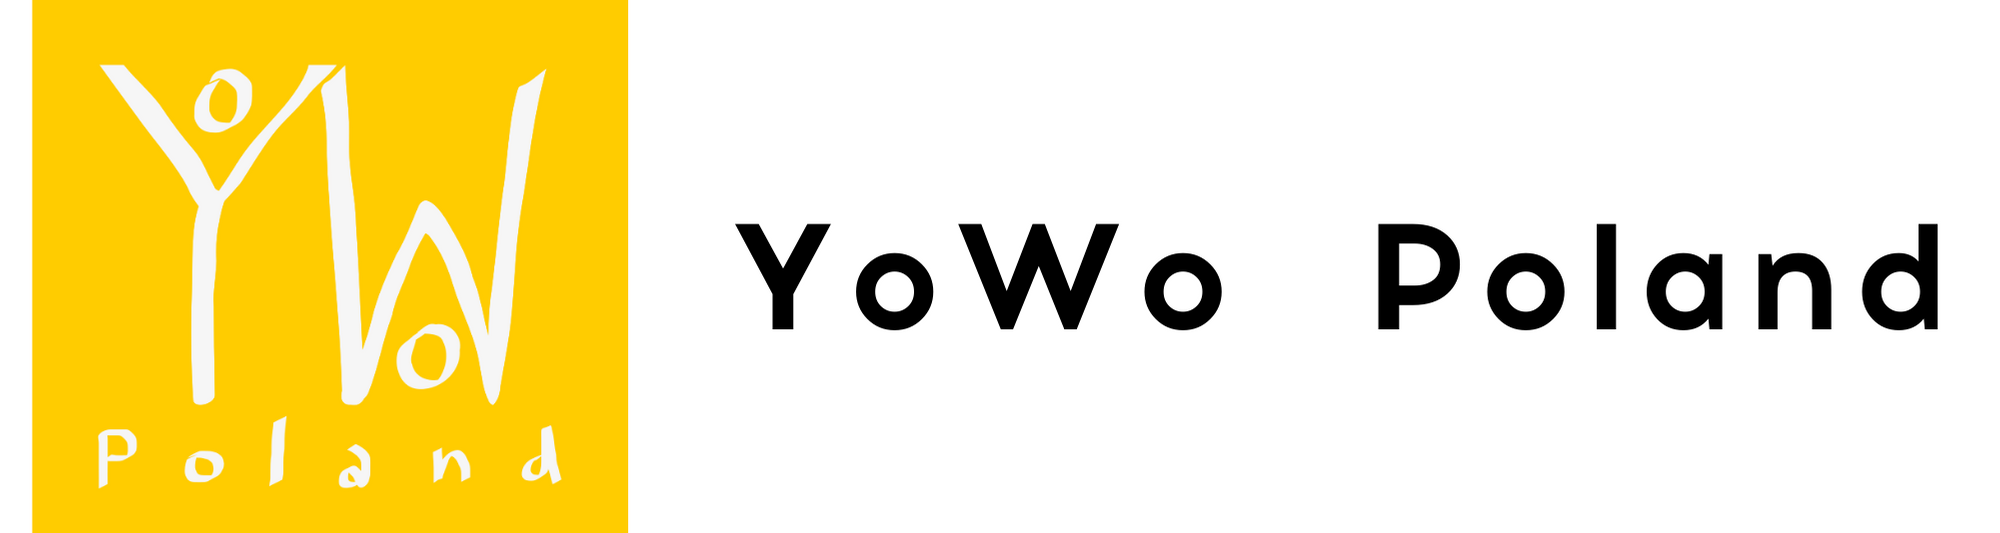 yowopoland.org